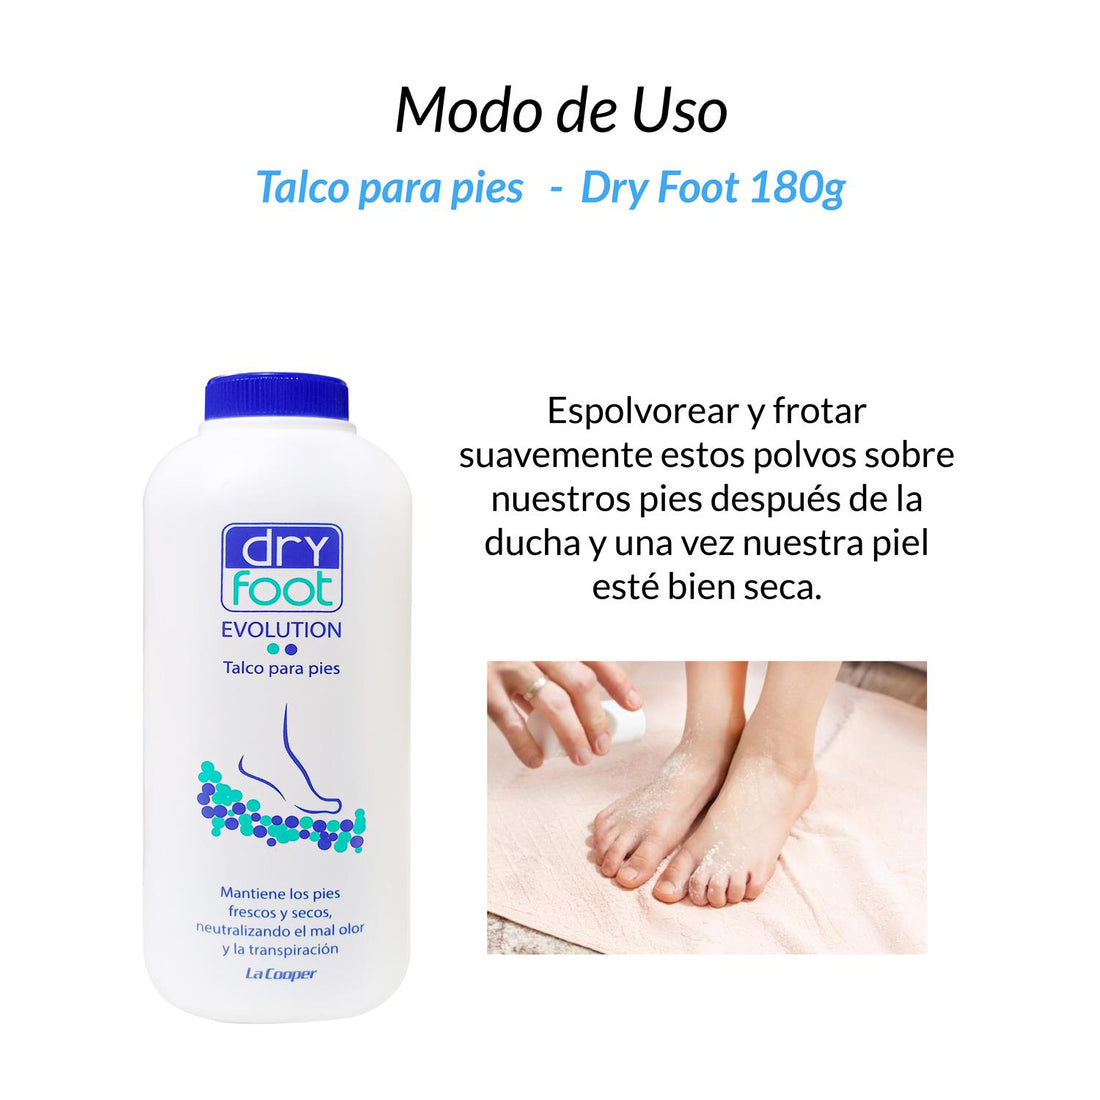 Talco para pies - Dry Foot 180g